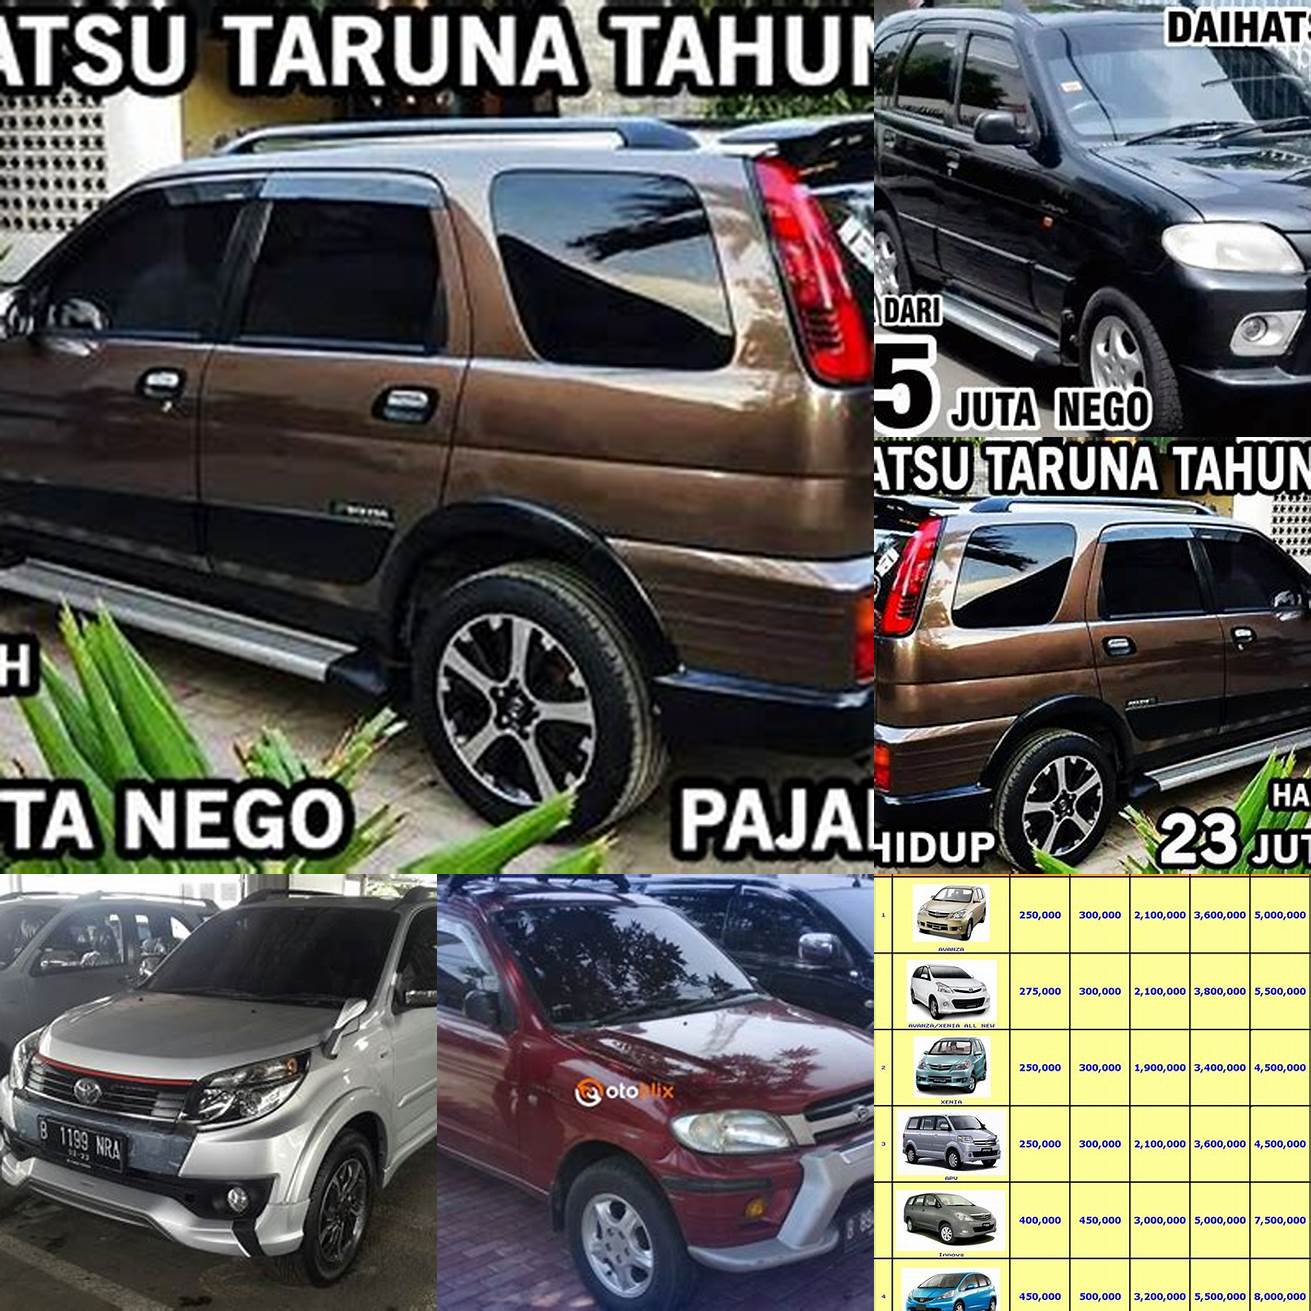 Harga mobil Taruna 2014 di Bandung